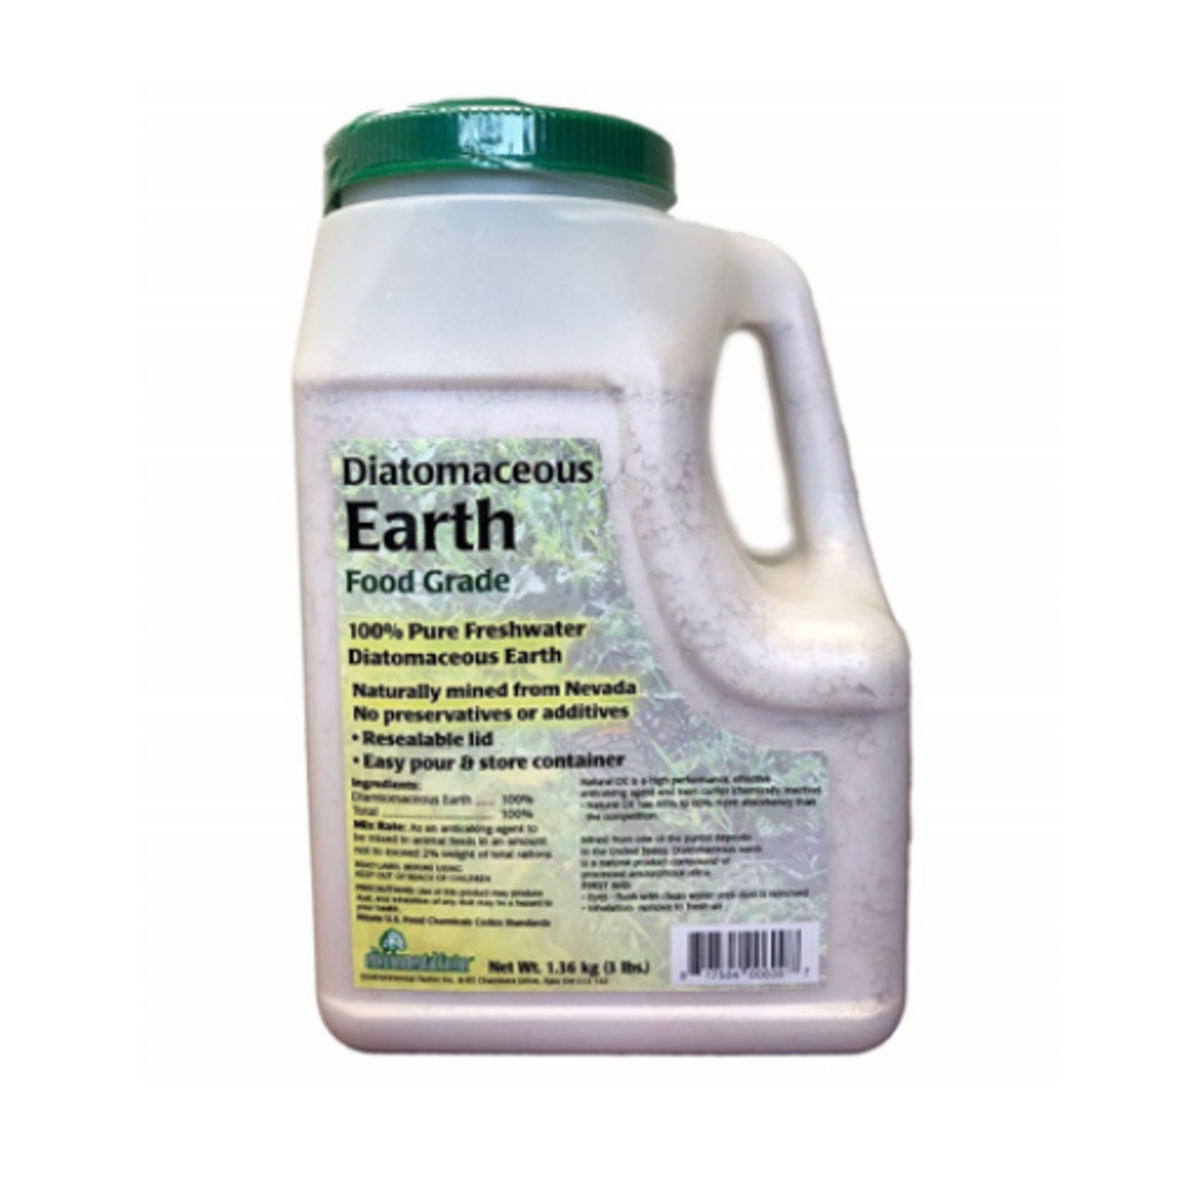 Picture of Diatomaceous Earth 3 lb jugs